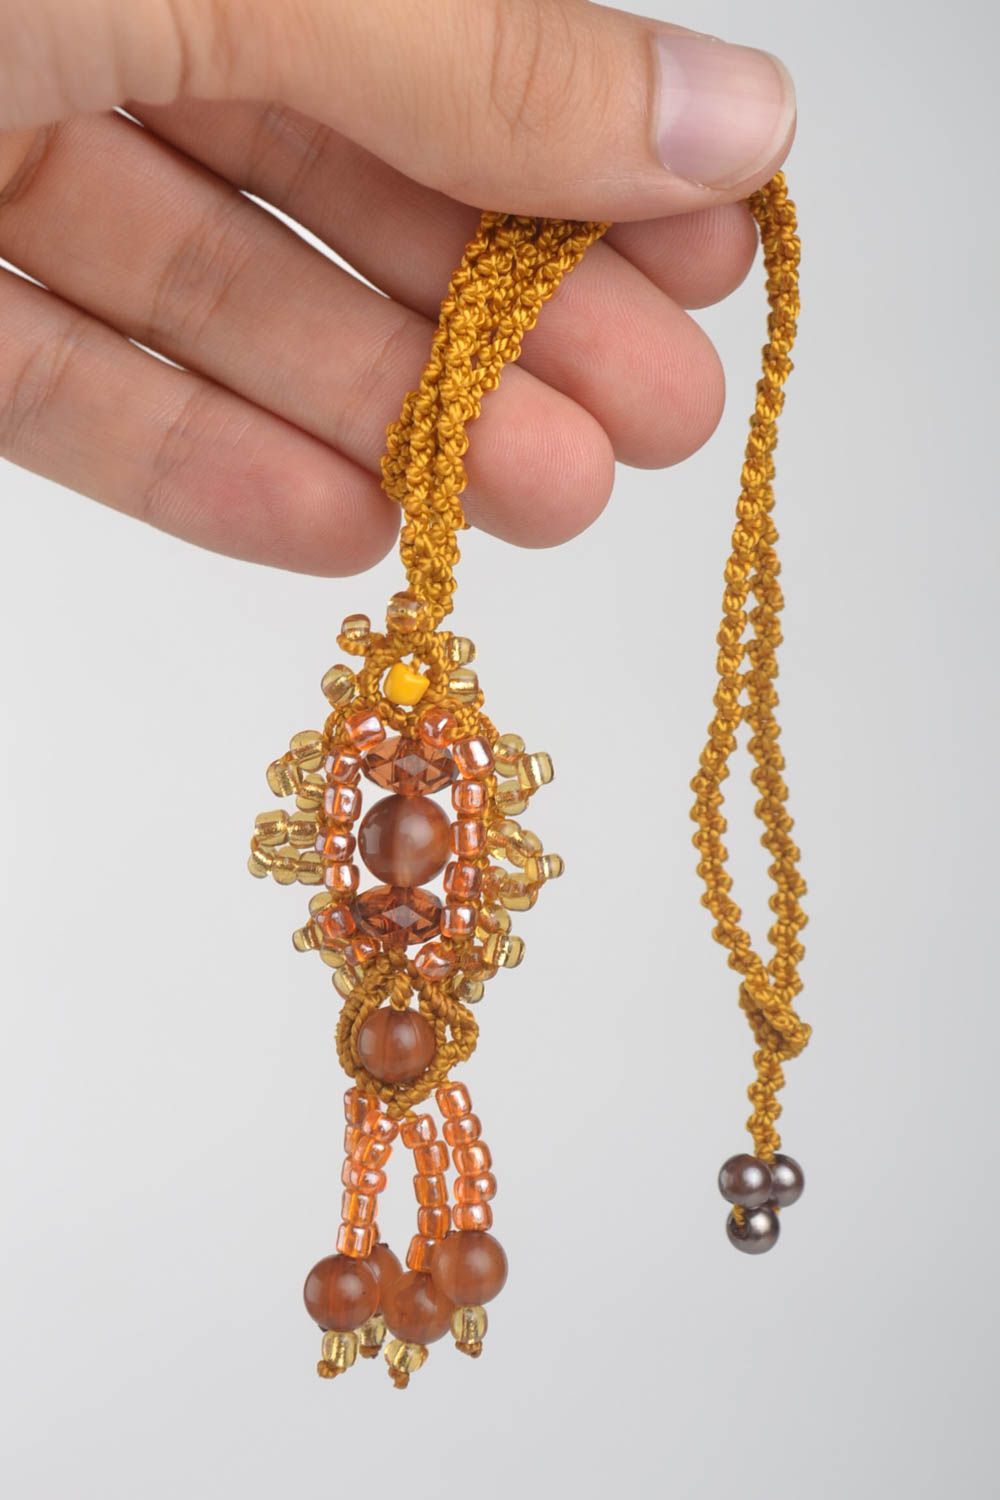 Handmade necklace macrame jewelry beaded necklace pendant necklace bead jewelry photo 5